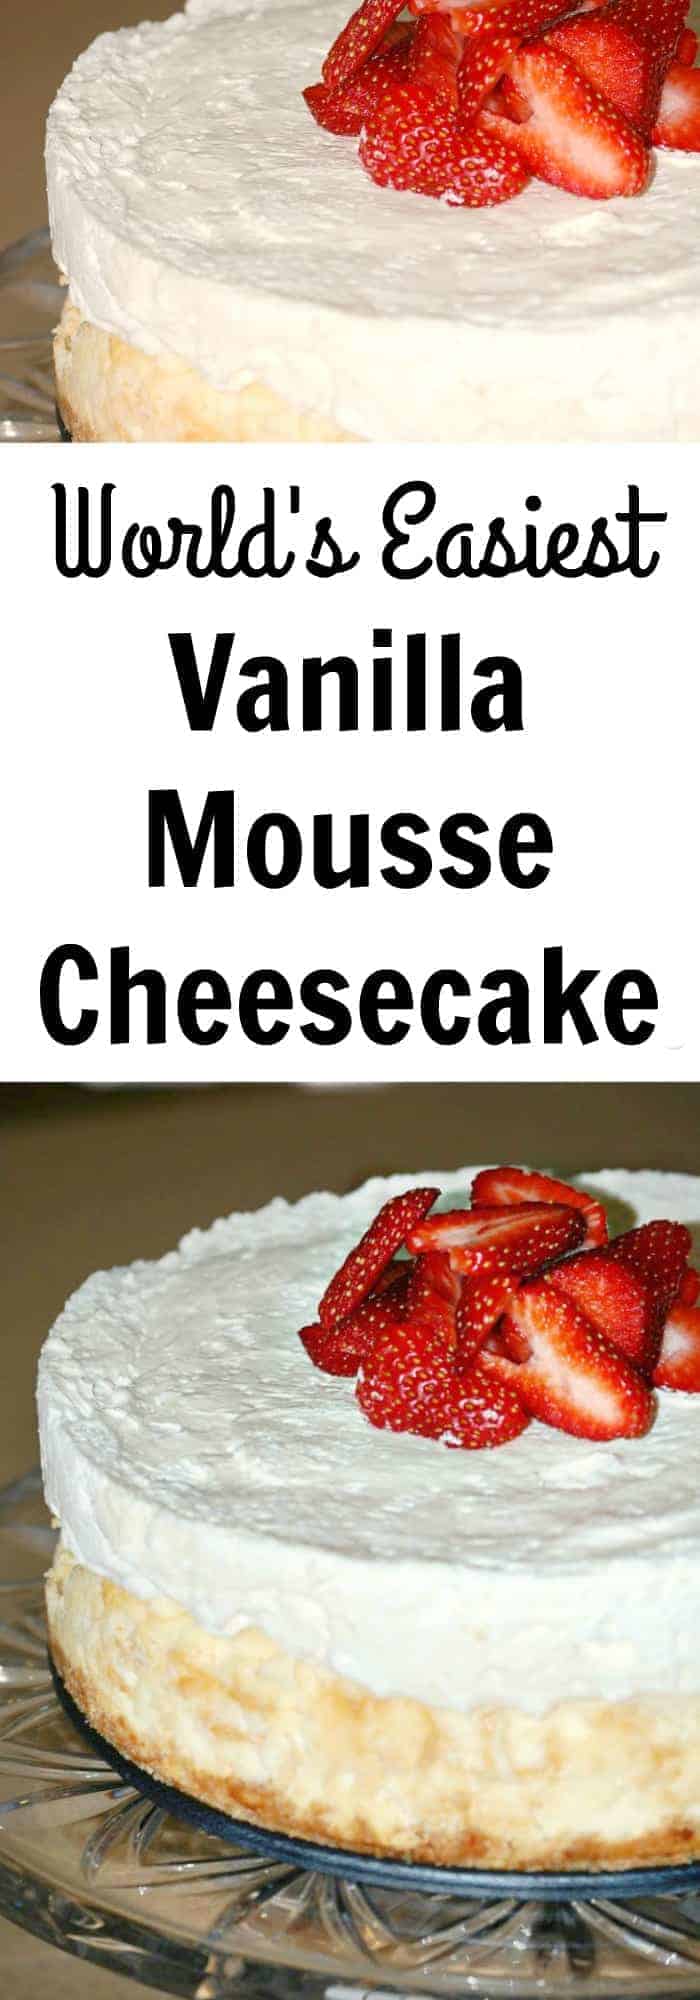 World's Easiest Vanilla Mousse Cheesecake Recipe